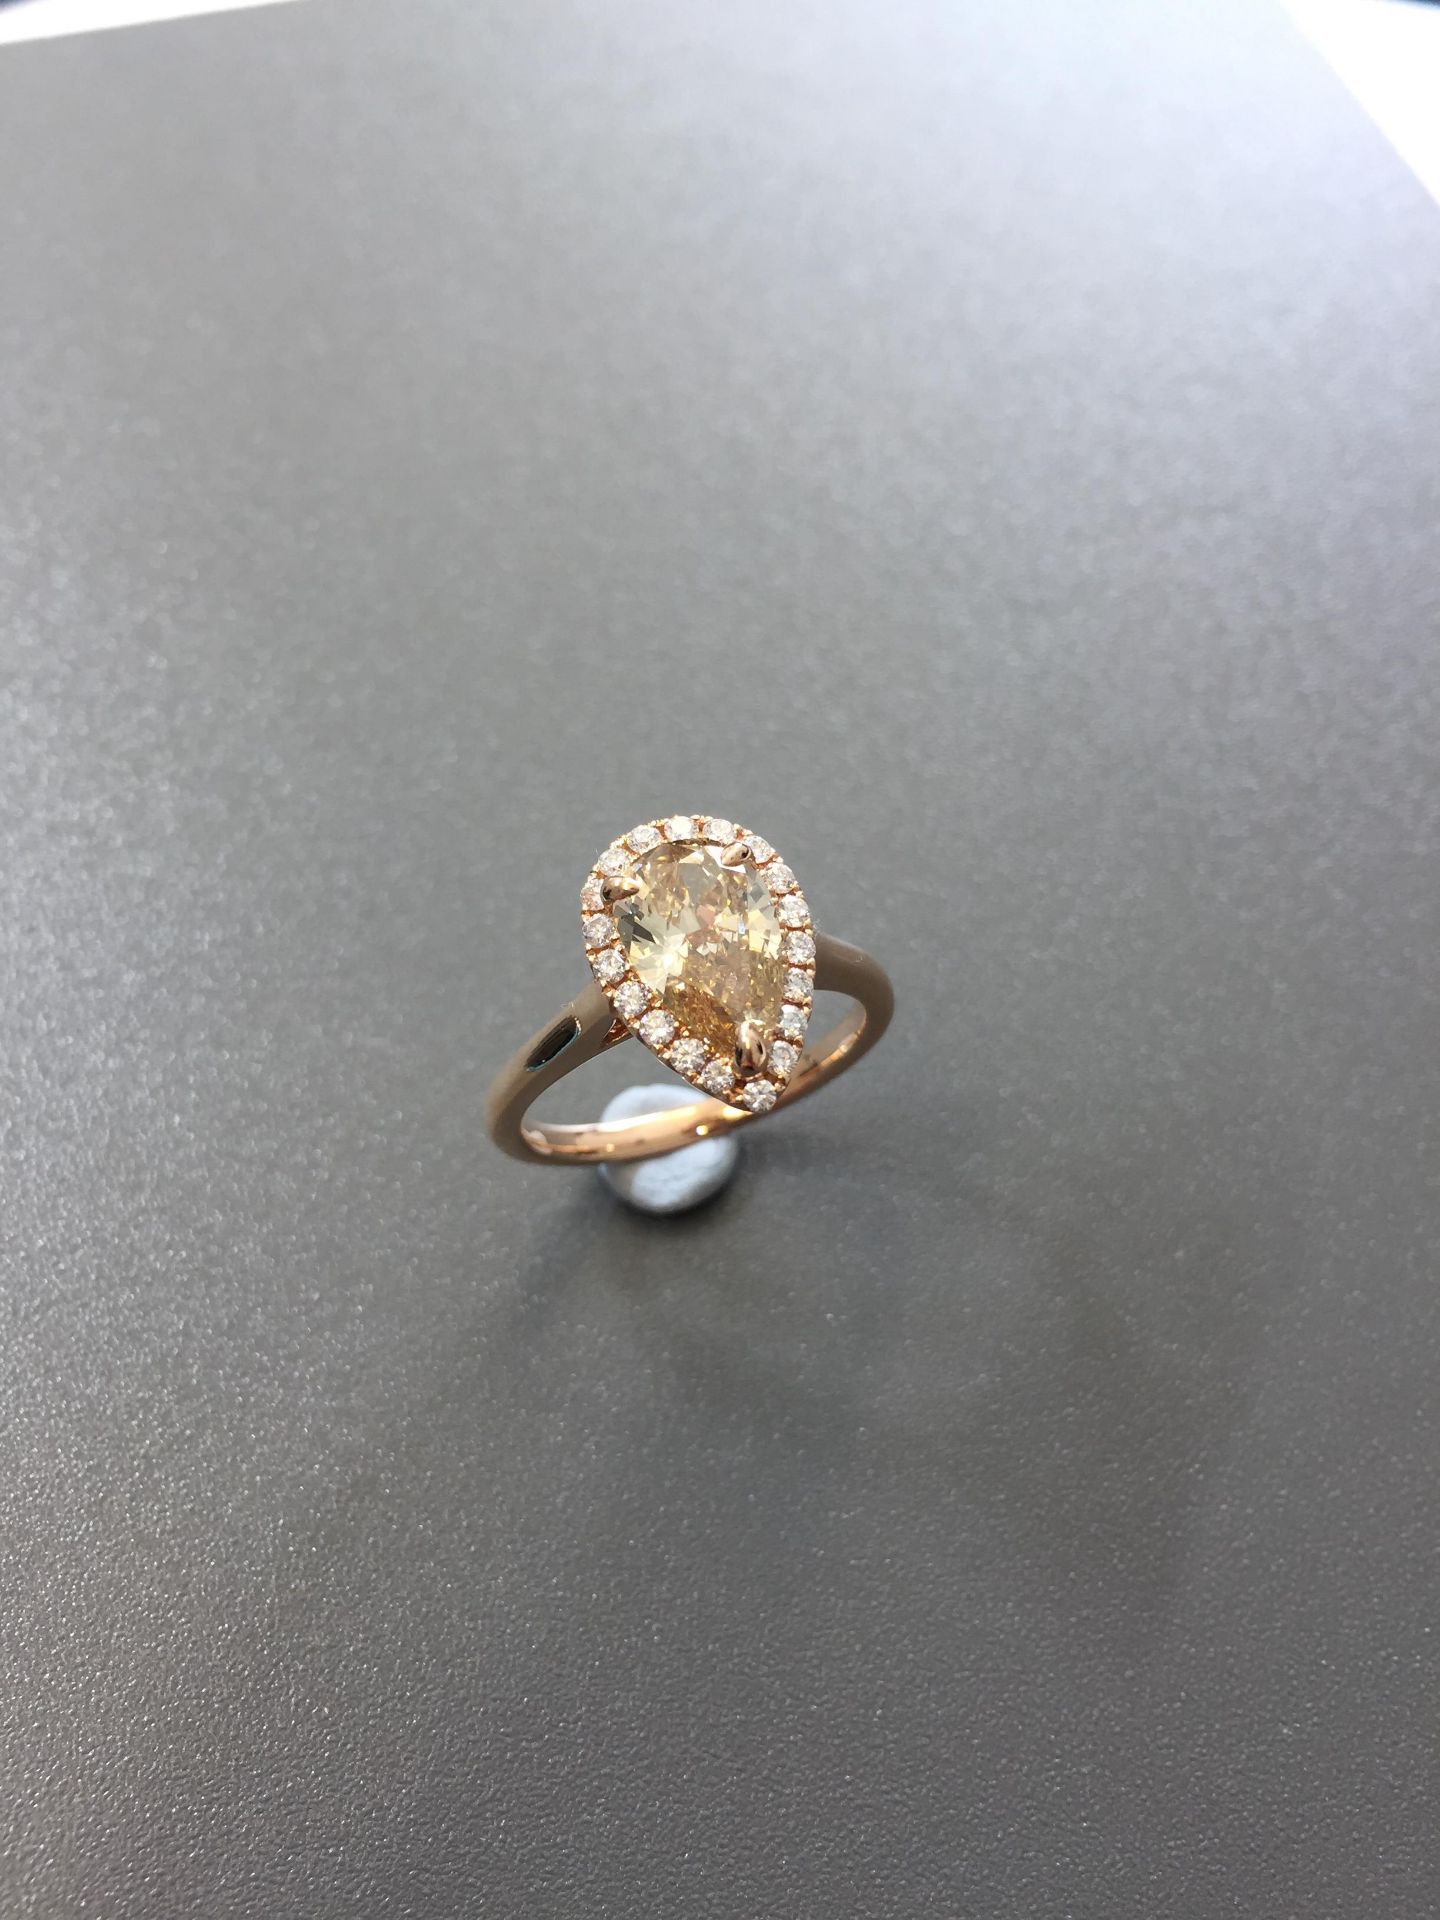 1.47ct pear shaped diamond set ring. Fancy yellow pear diamond, I1 clarity. Set in platinum. GIA